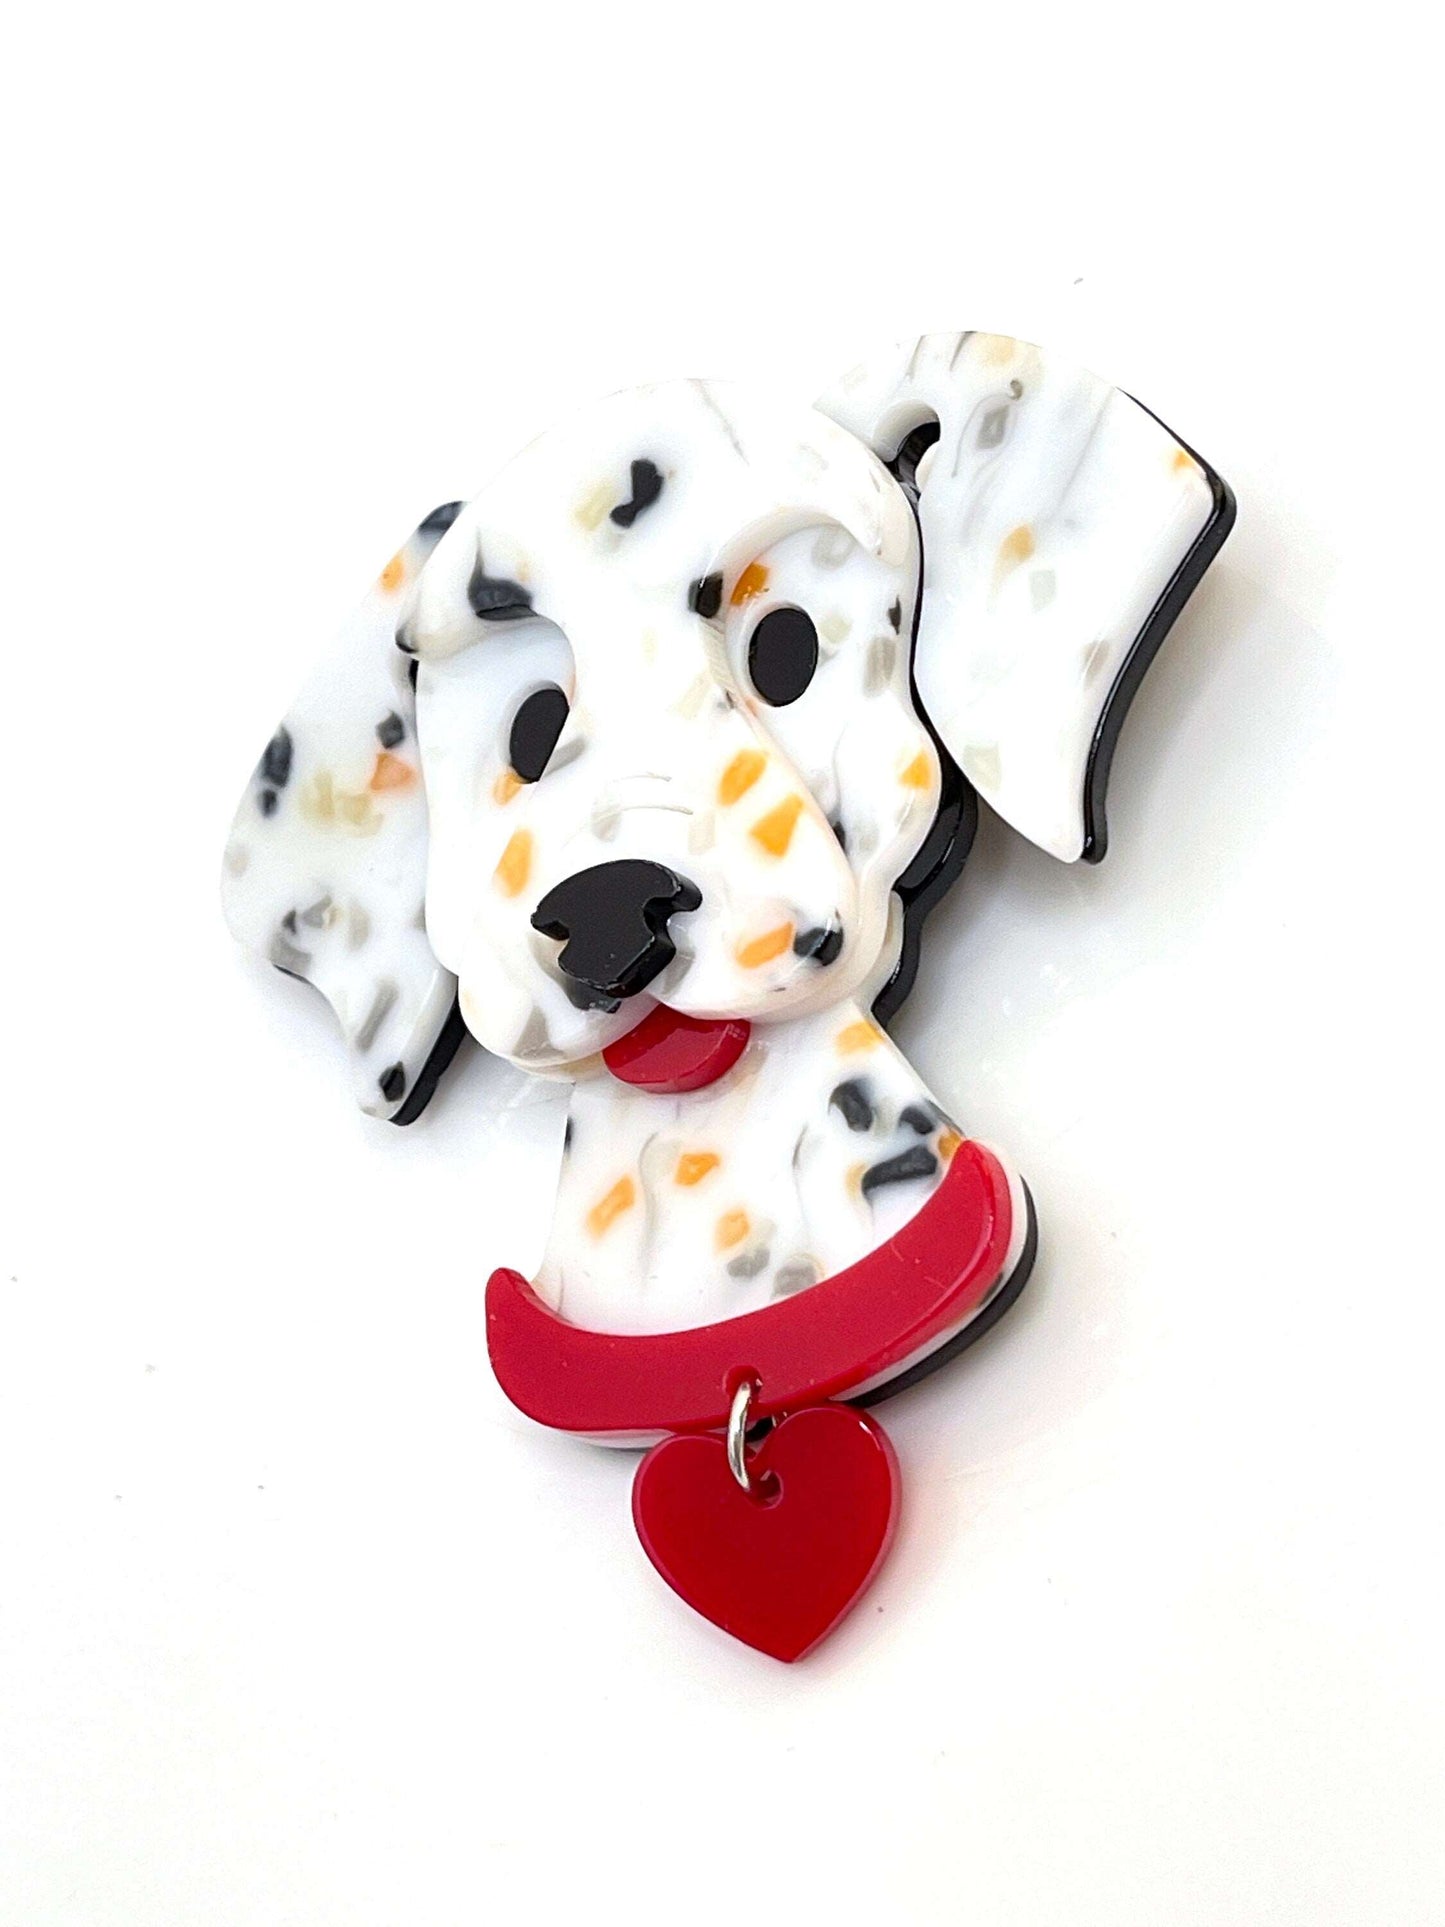 Cheeky Dalmatian Style Dog Brooch | Large Dog Head Pin | Fashion Accessory